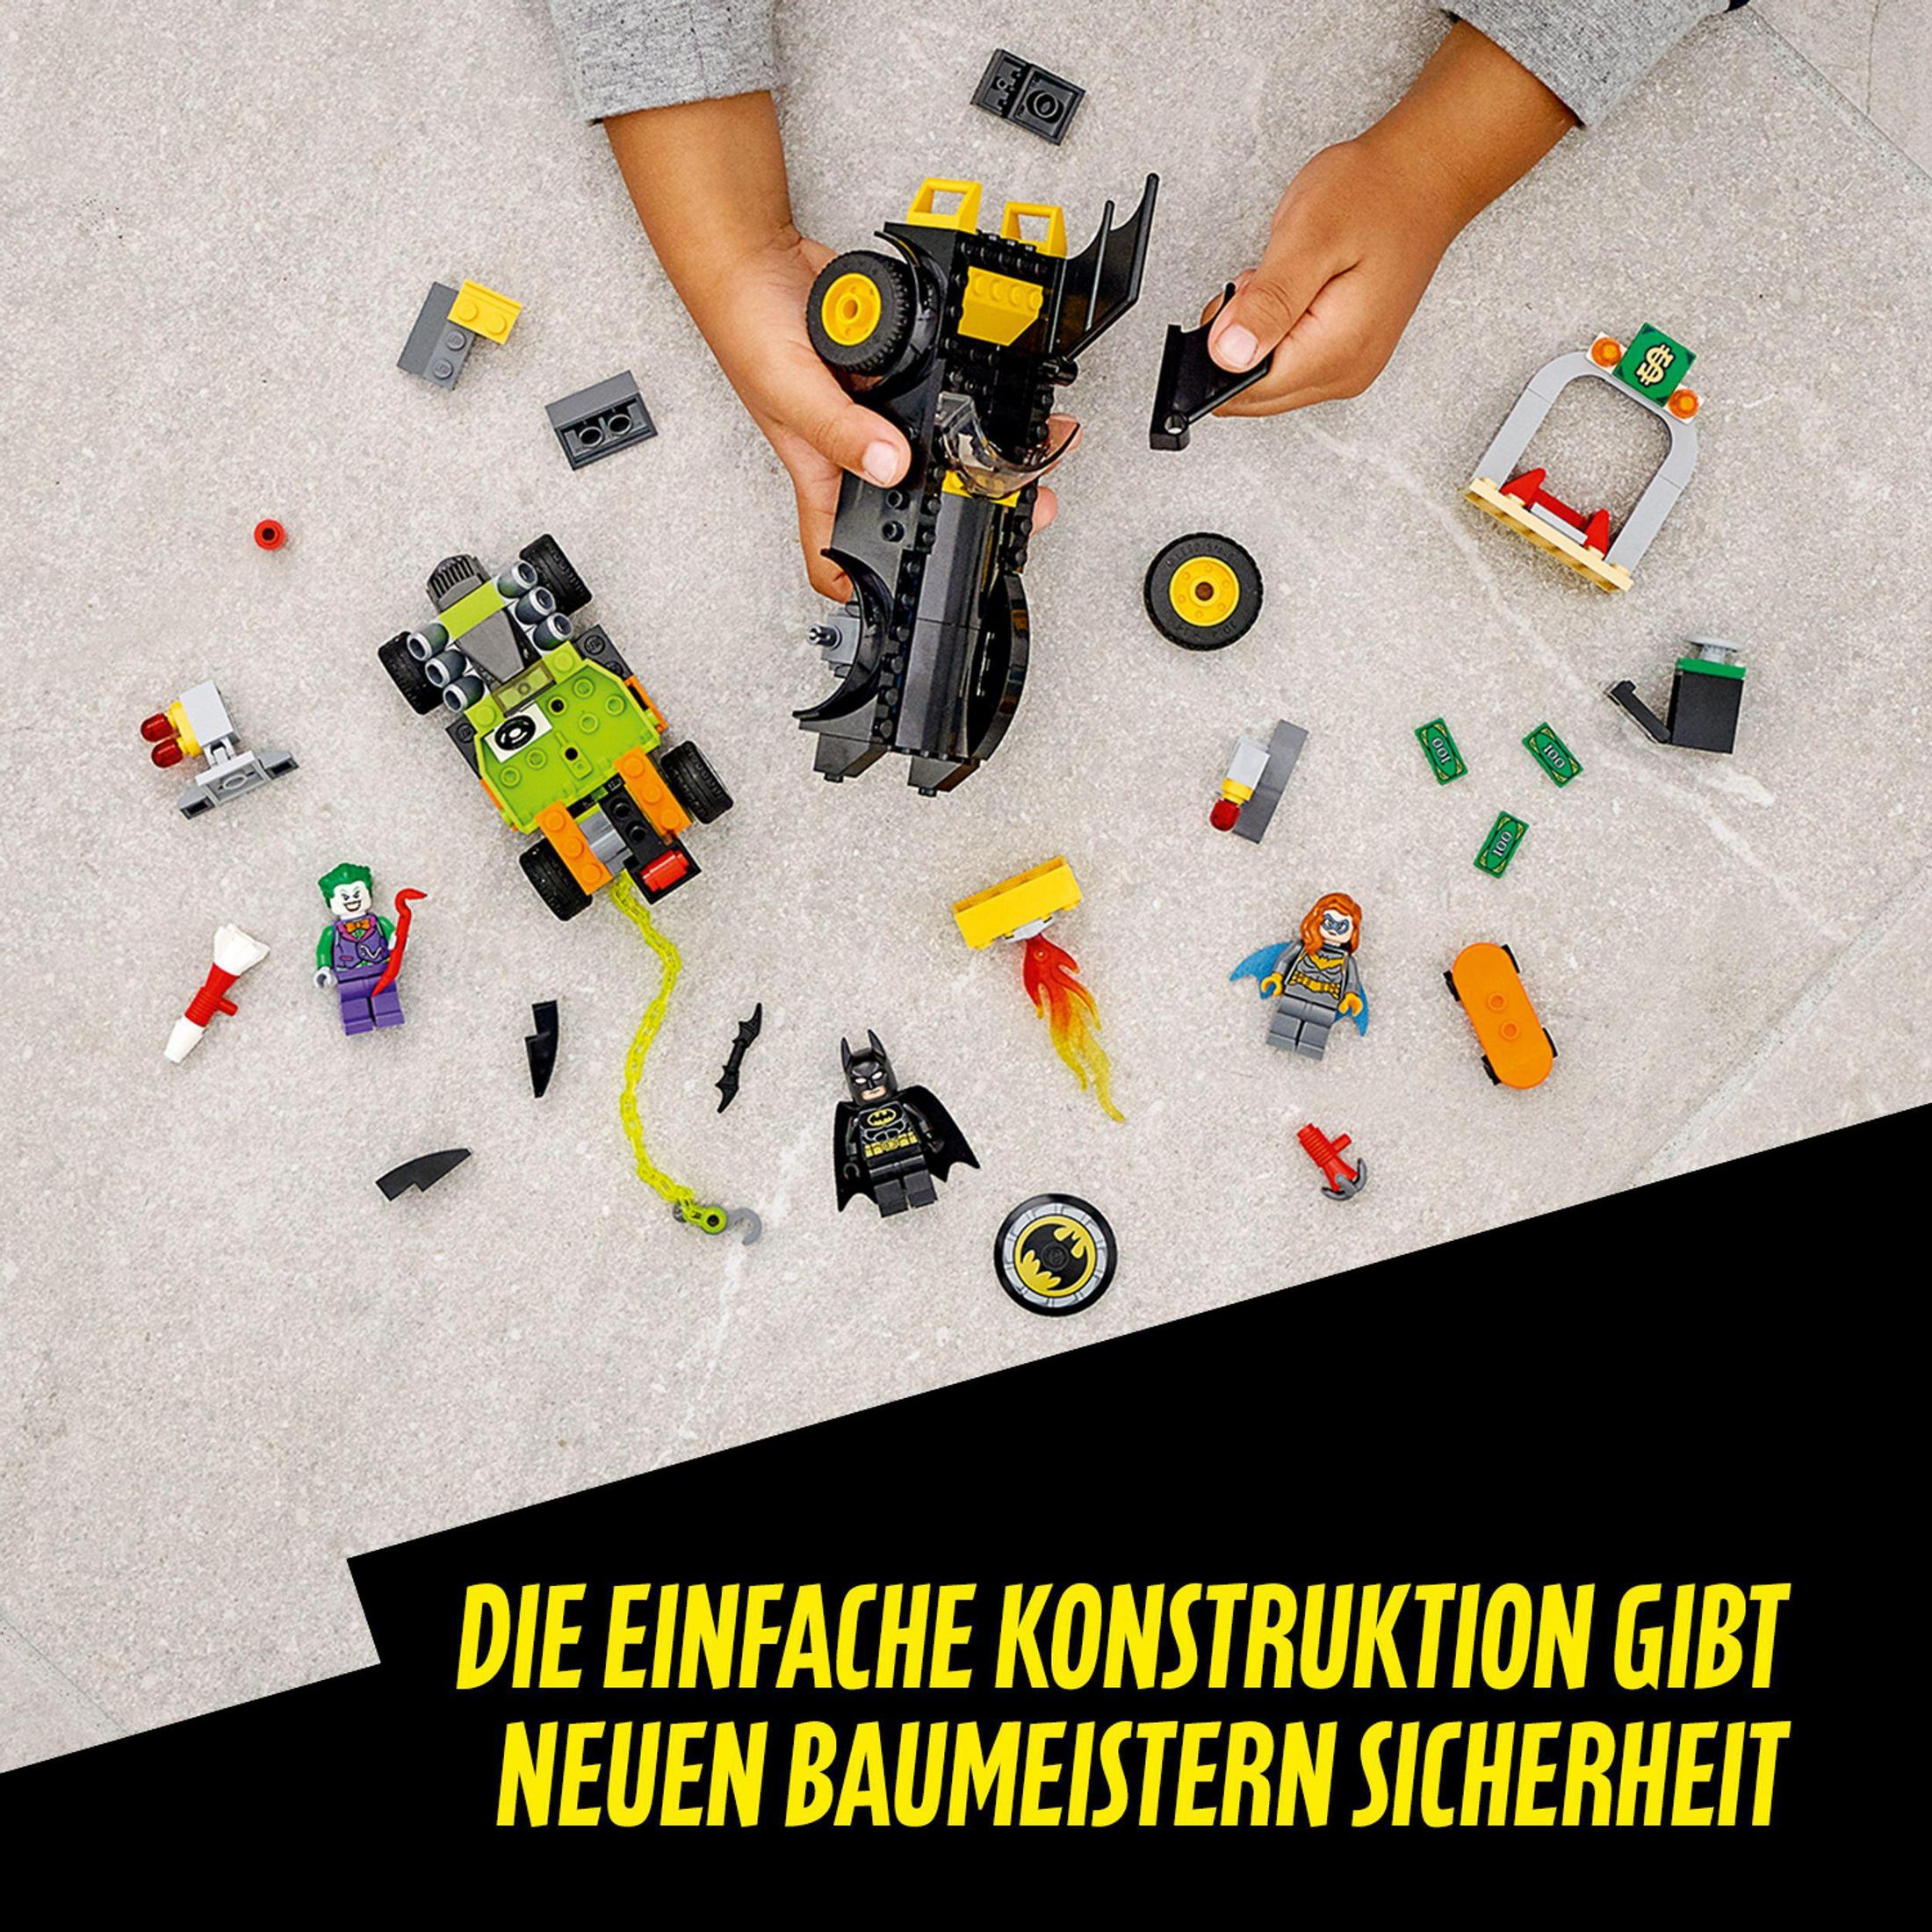 LEGO JOKER-VERFOLGUNGSJAGD IM BATMAN Bauset, 76180 Mehrfarbig VS.